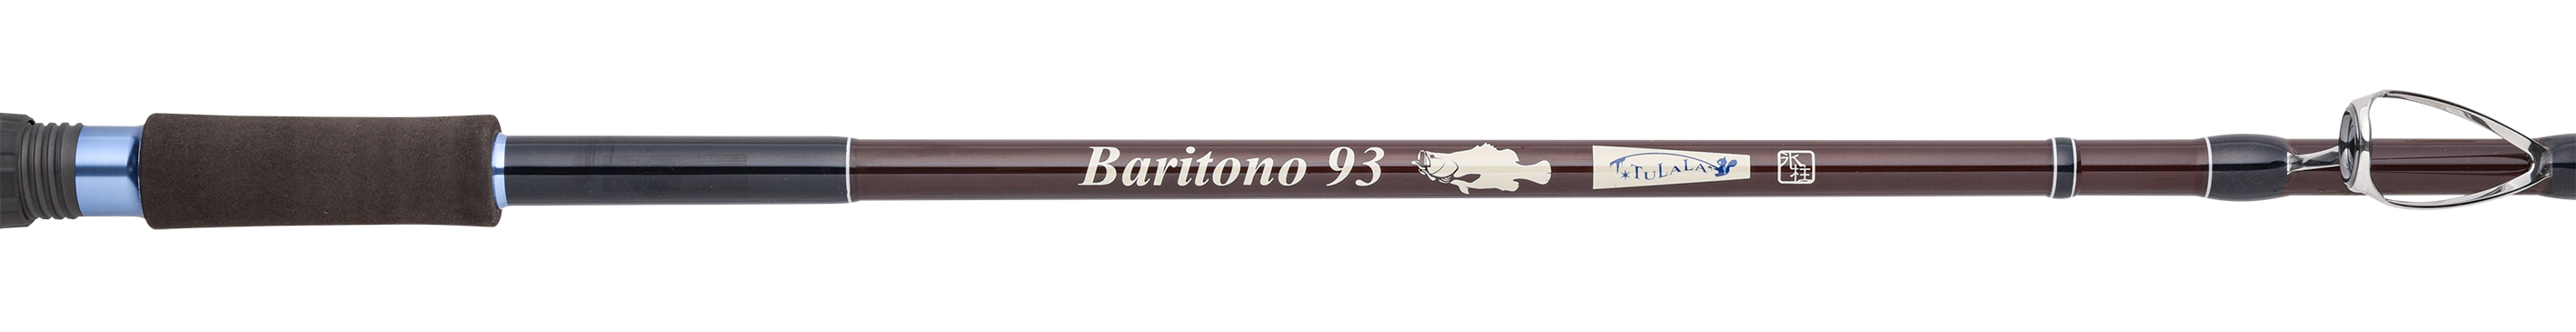 Baritono 93 | ジョイント